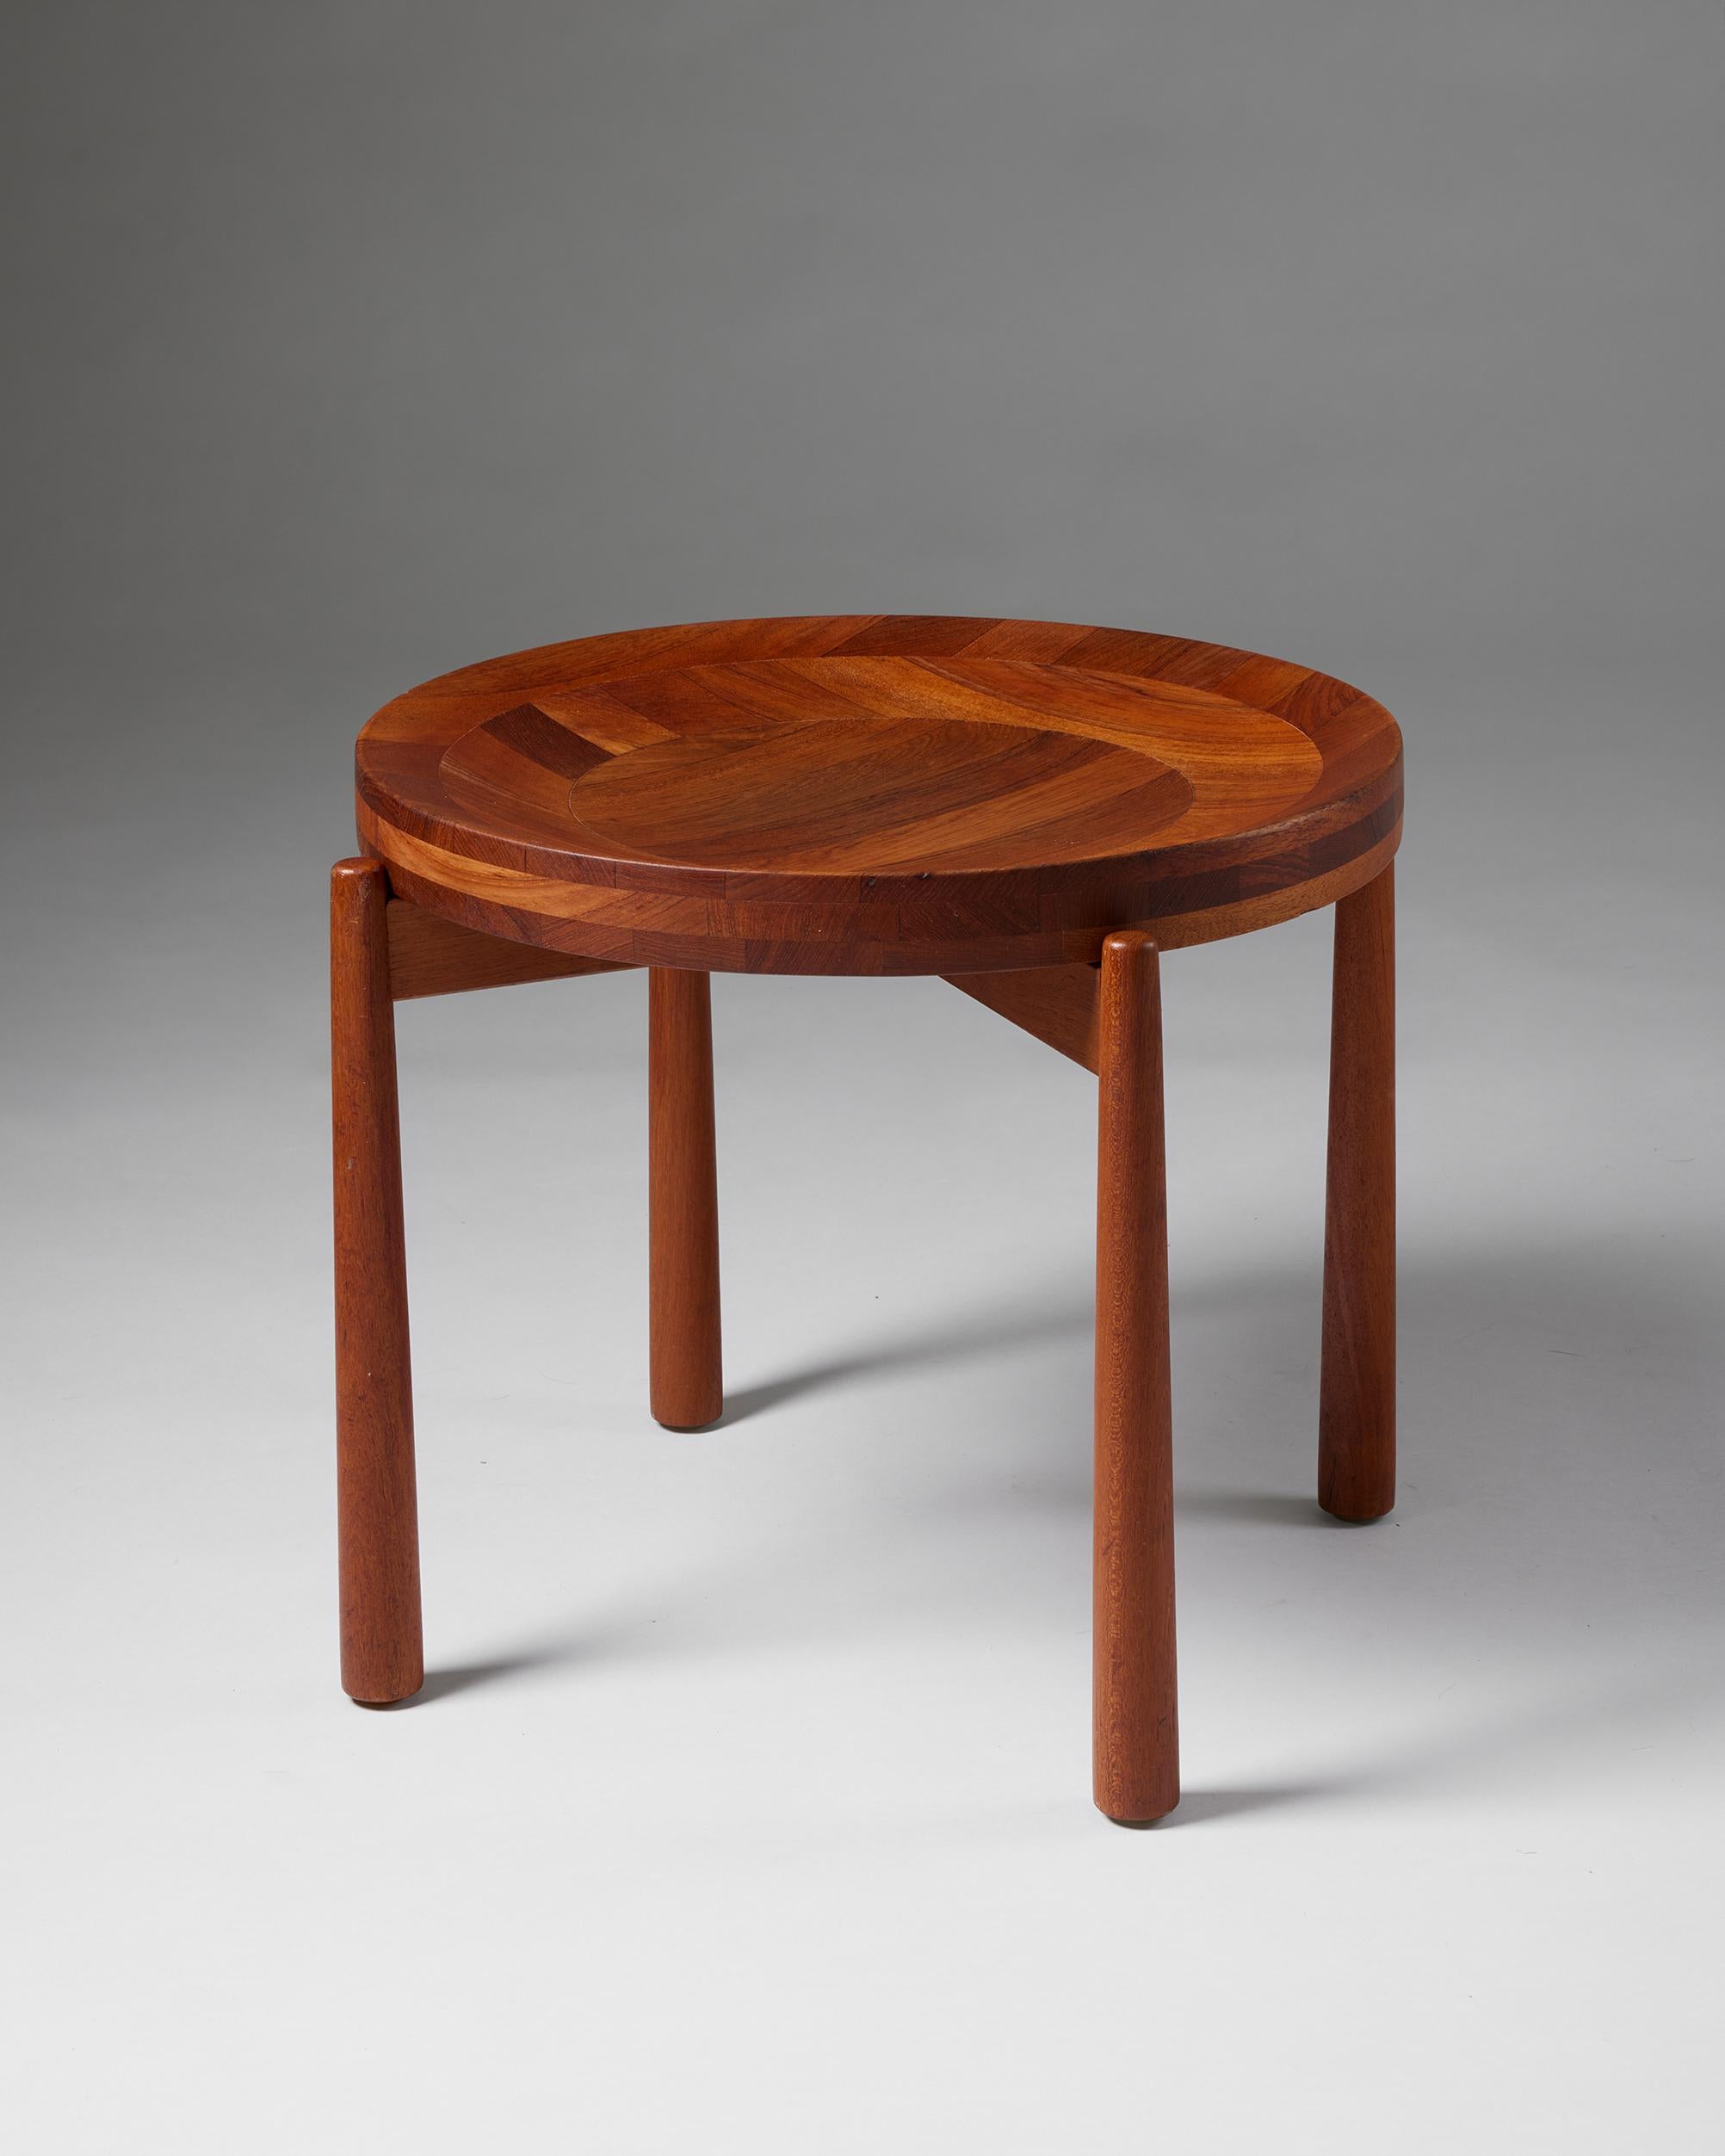 Side table designed by Jens Quistgaard,
Denmark, 1950s.

Teak.

H: 44 cm 
Diameter: 55.5 cm 